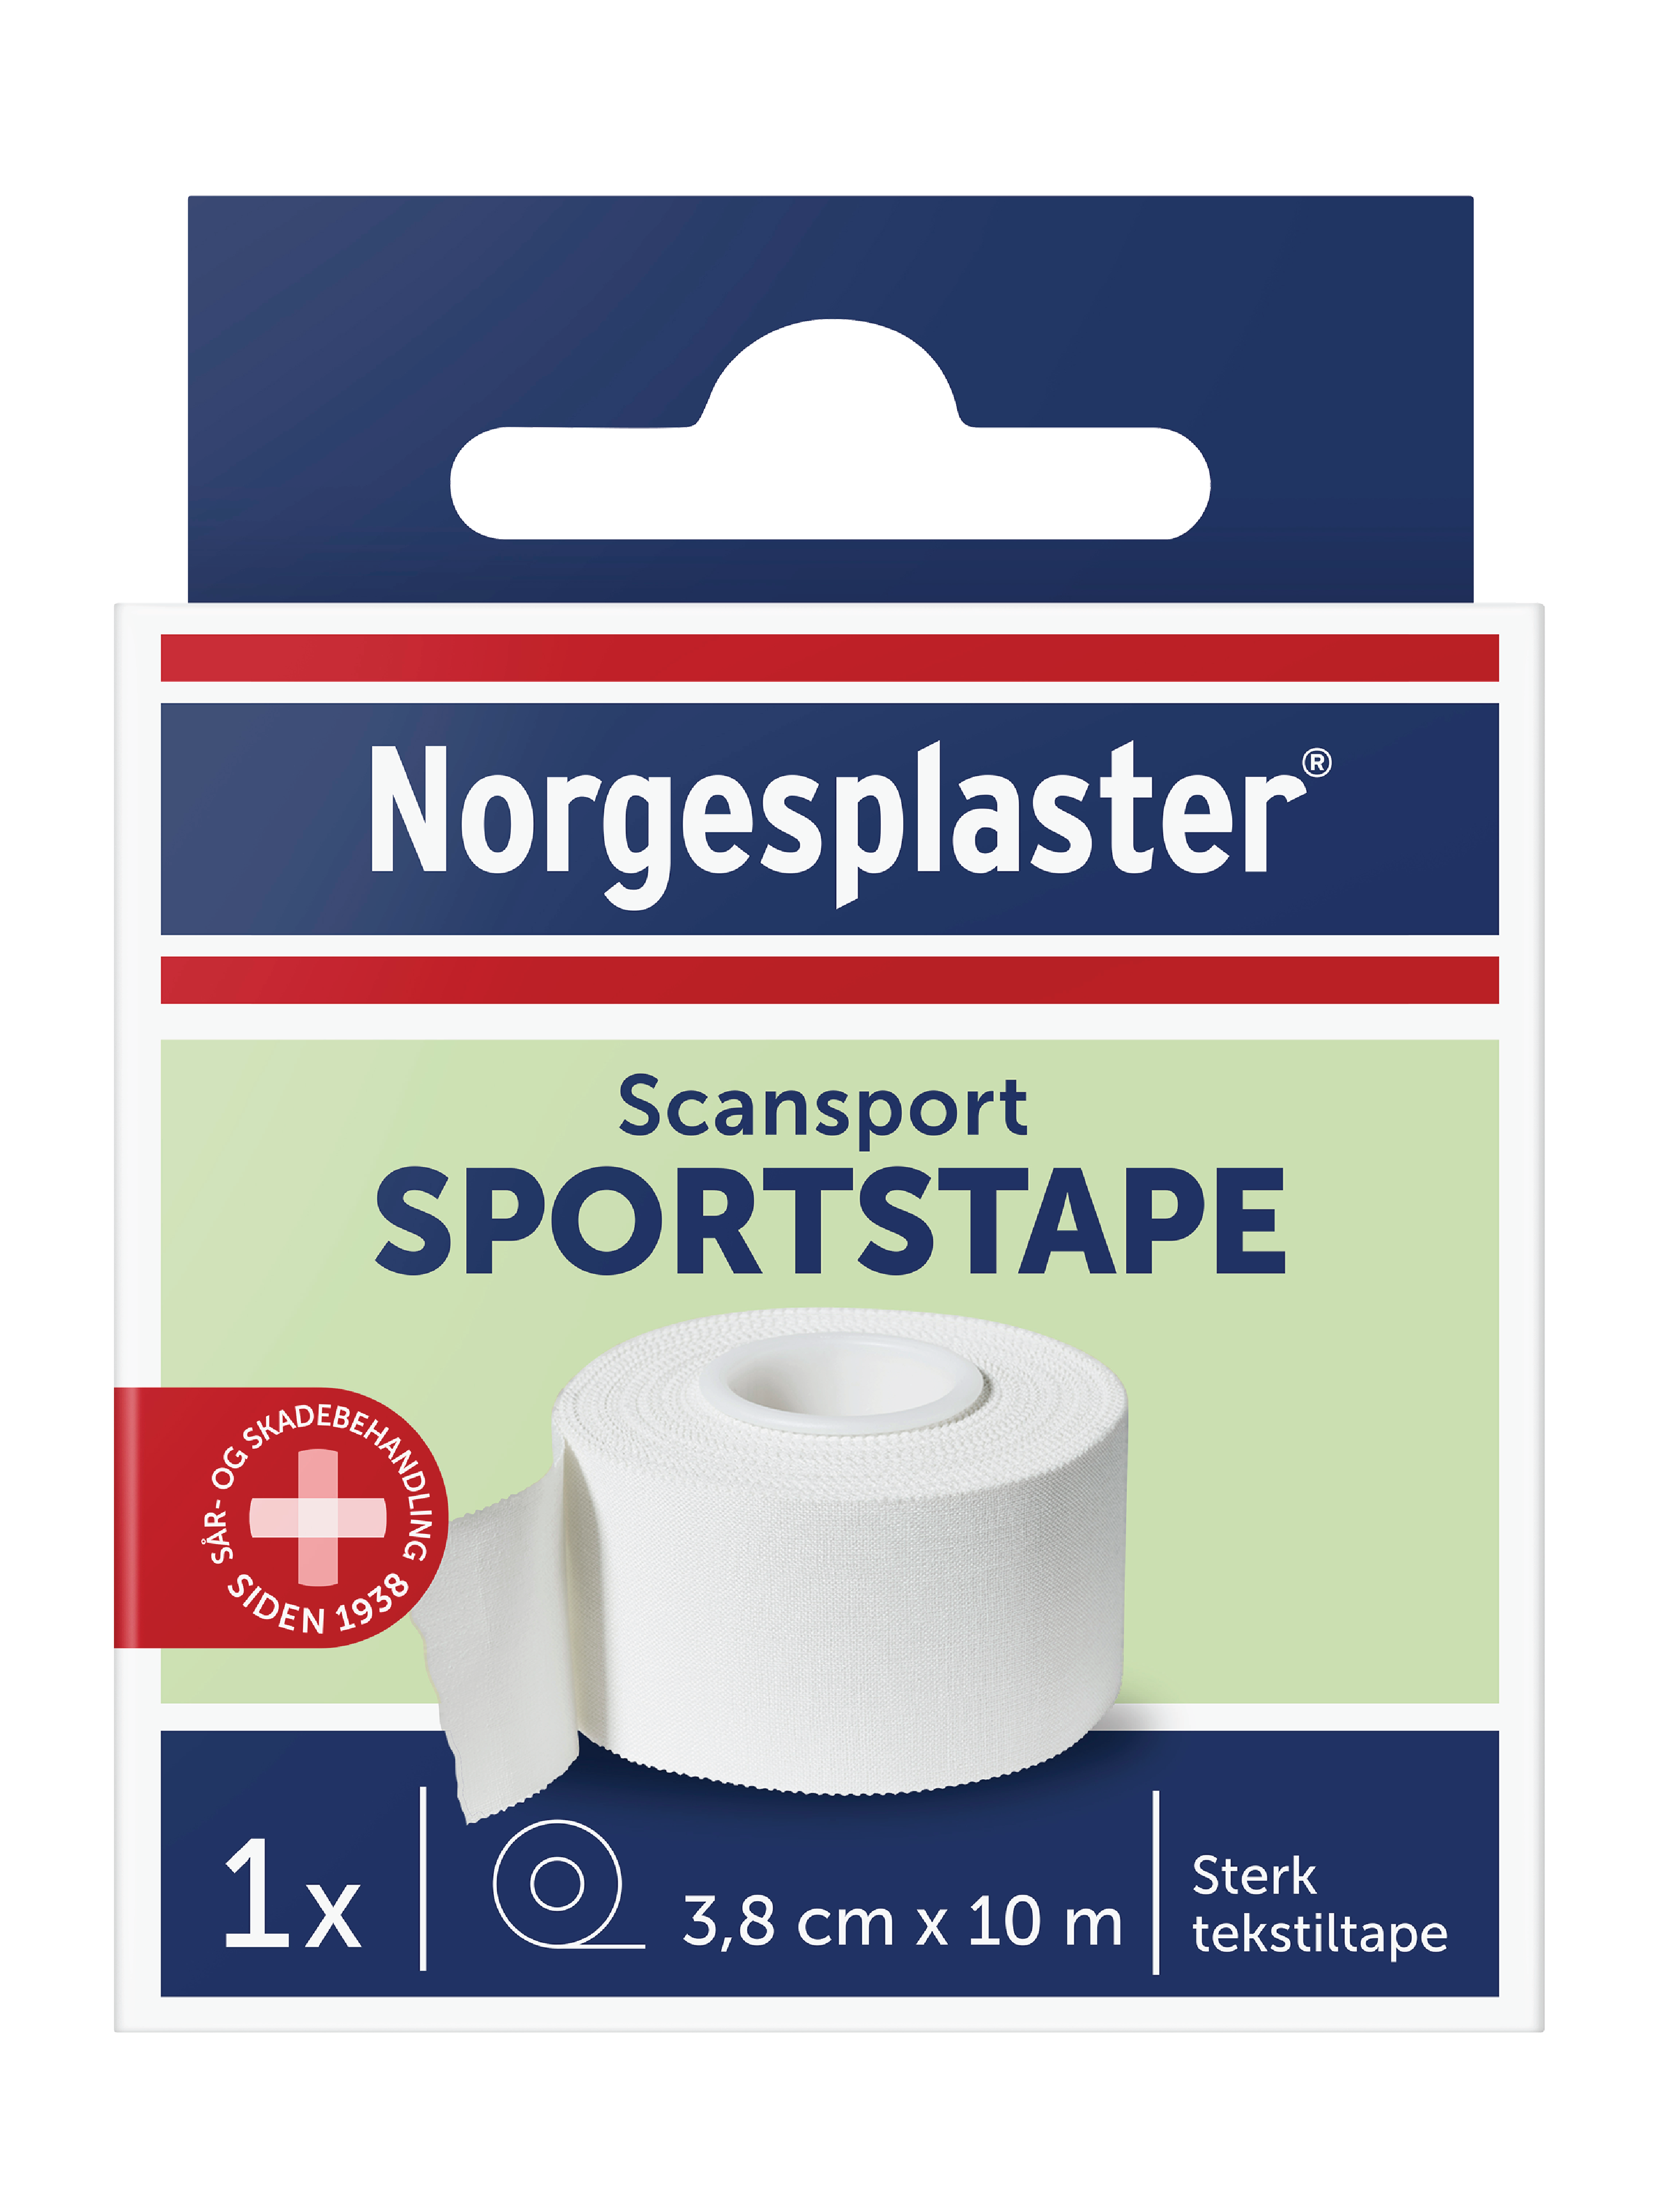 Norgesplaster Scansport sportstape, 3,8cm x 10m, 1 stk.